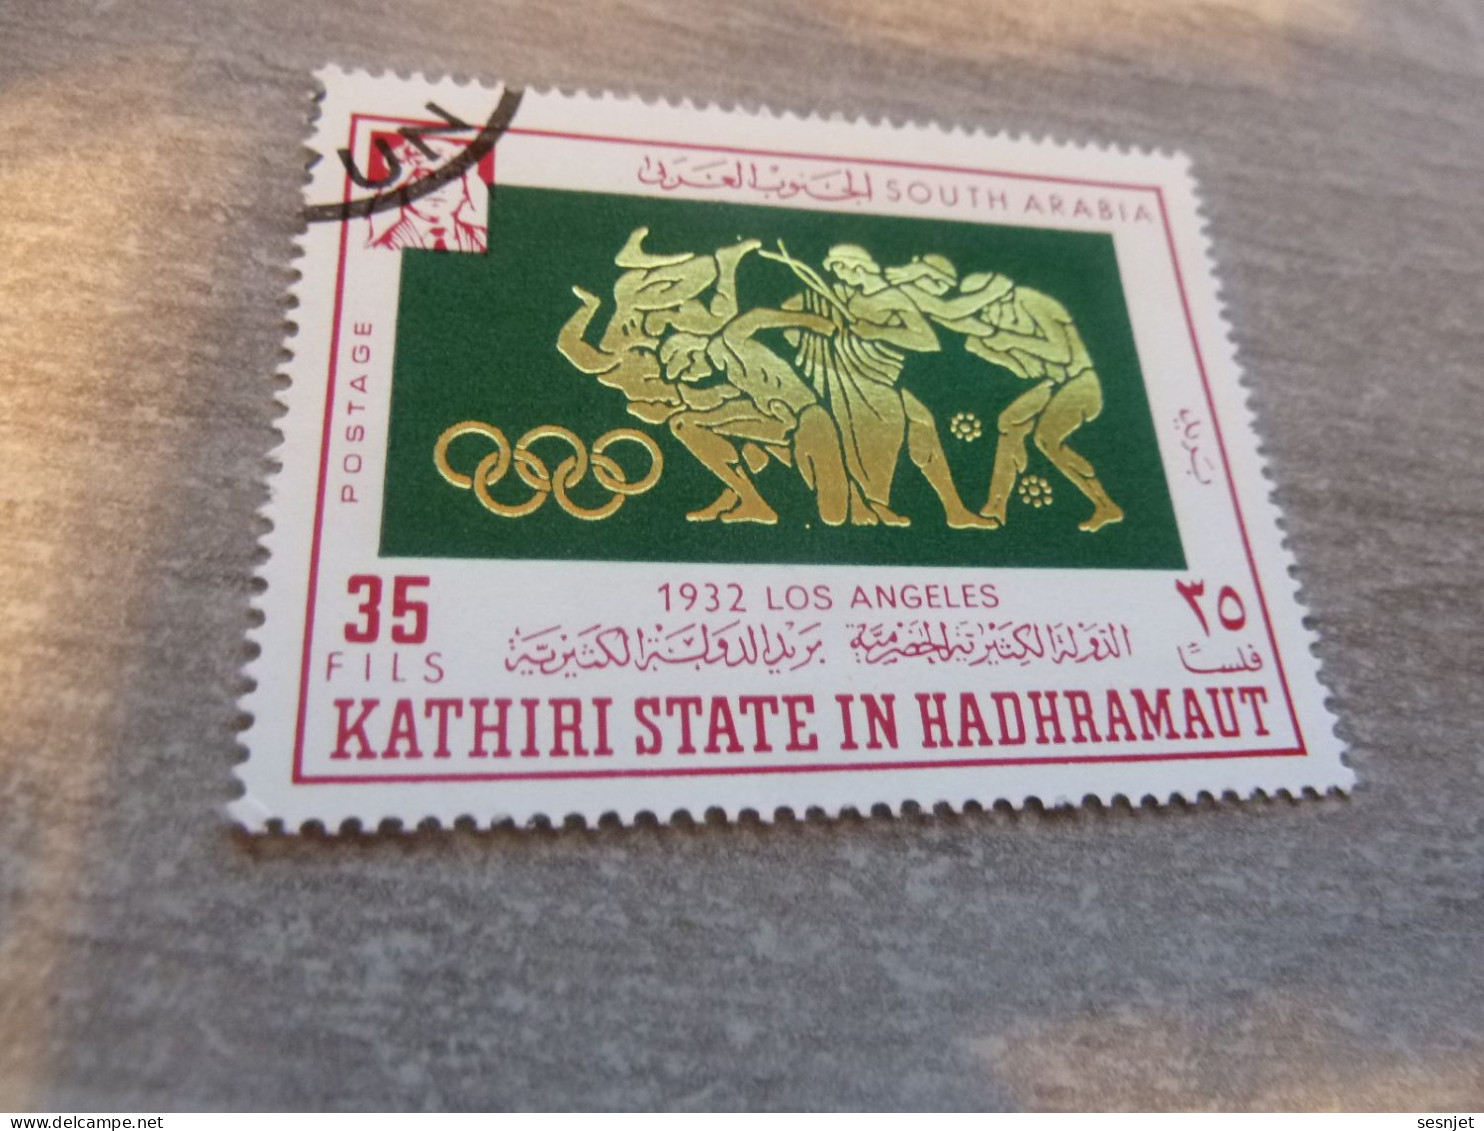 Kathiri State In Hadhramaut - 1932 - Los Angeles - Val 35 Fils - Postage - Multicolore - Oblitéré - - Ete 1932: Los Angeles